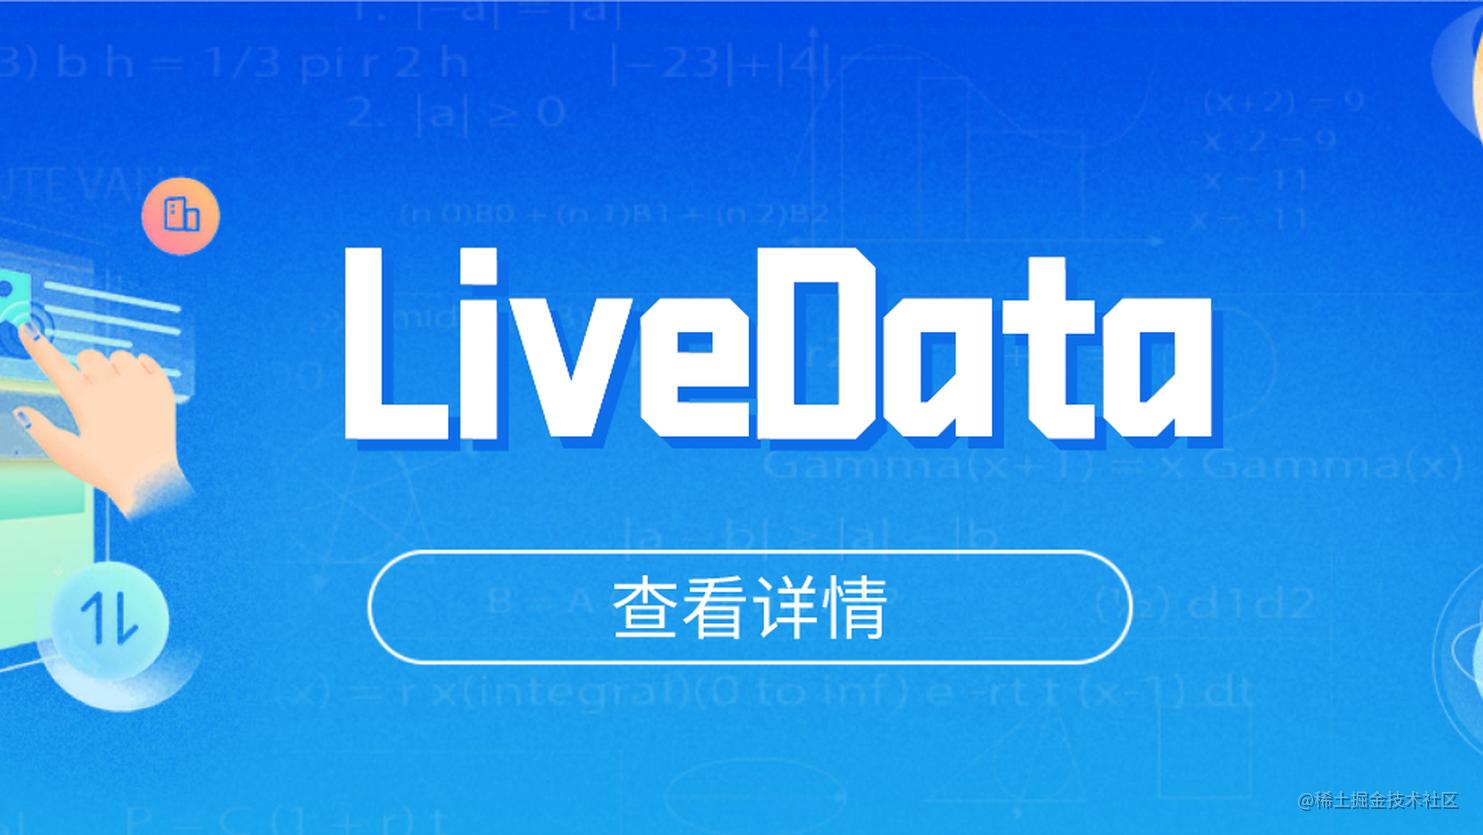 【Jetpack篇】LiveData取代EventBus？LiveData的通信原理和粘性事件刨析